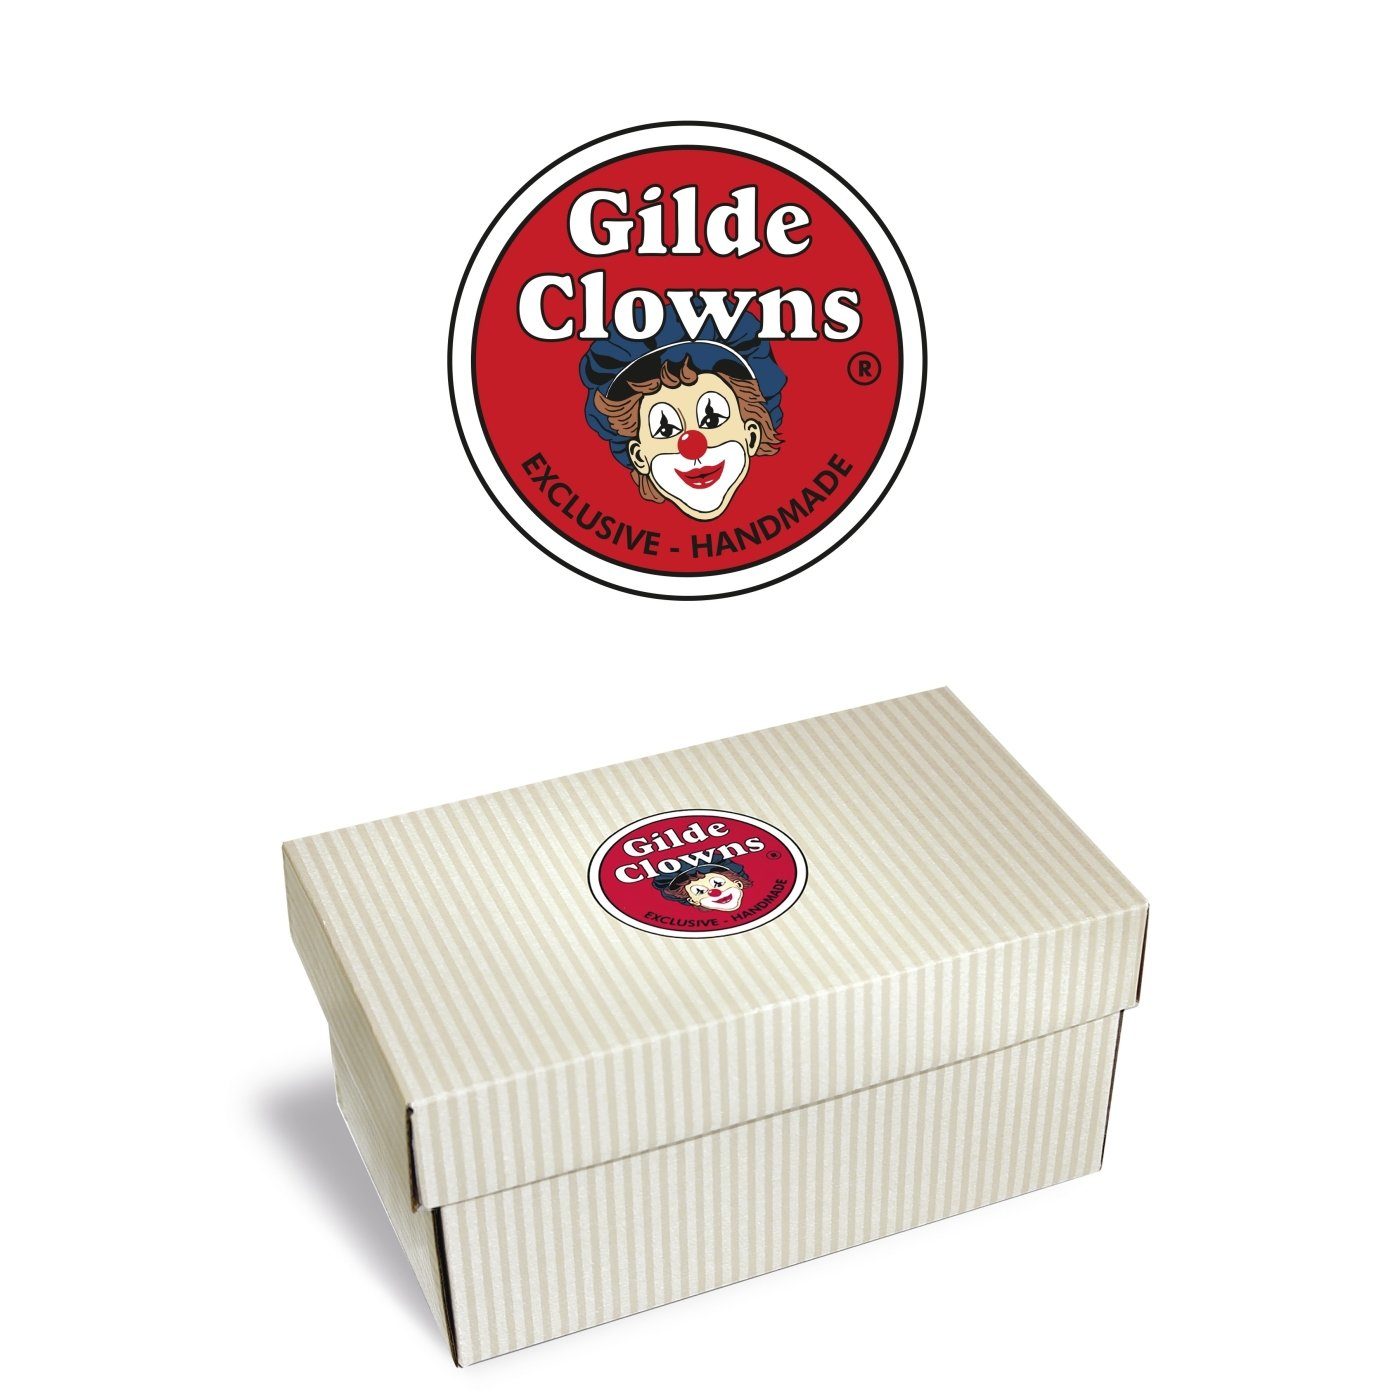 Gildeclowns - - Grillprofi Sammelfigur Dekofigur Indoor Clown GILDE